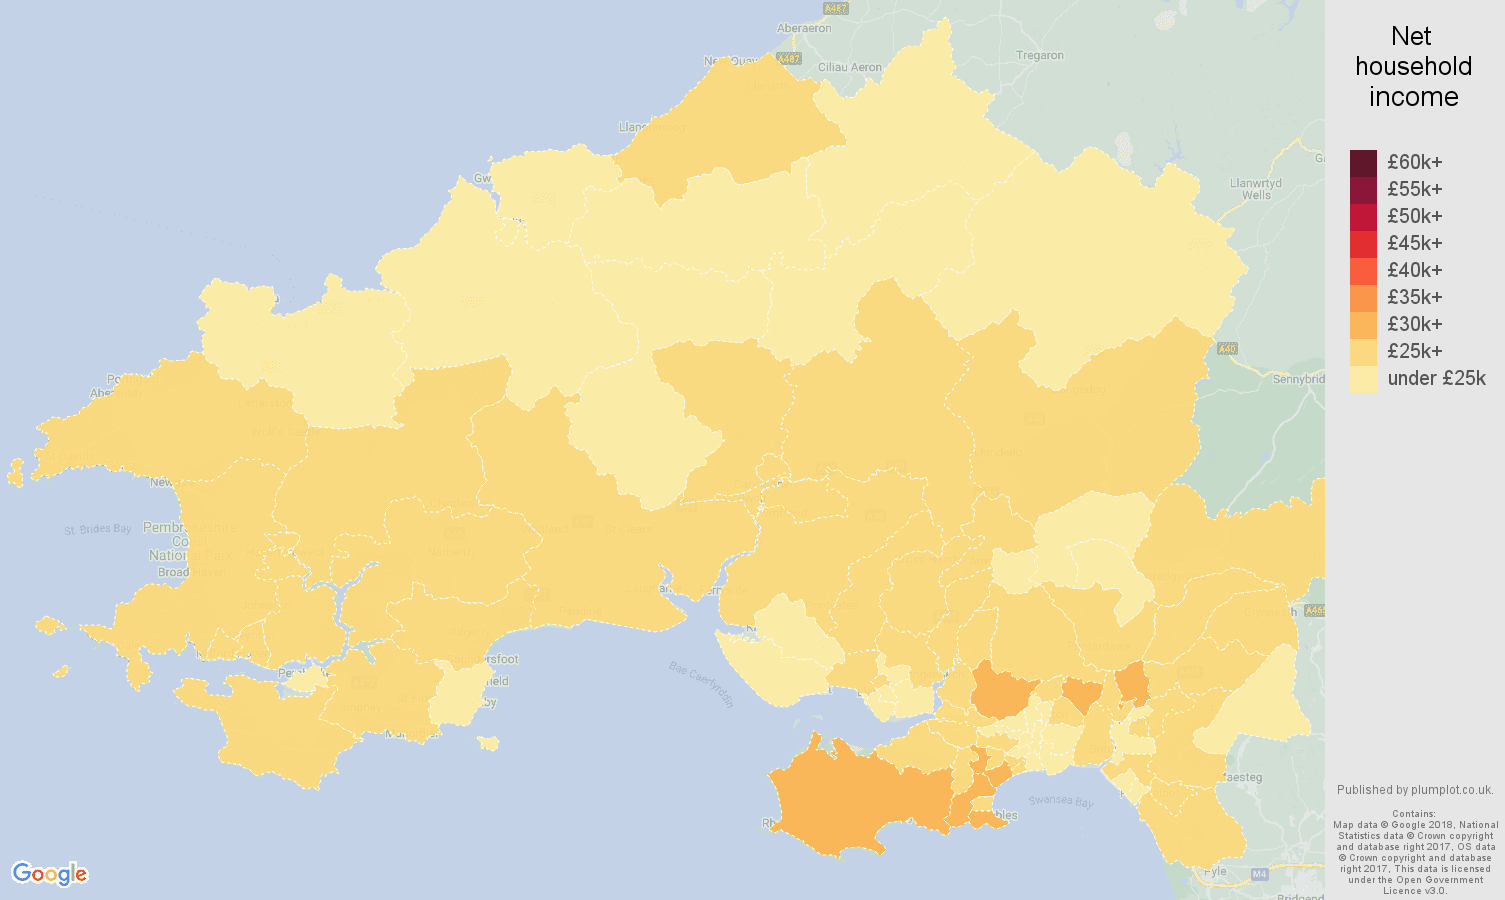 Swansea net household income map